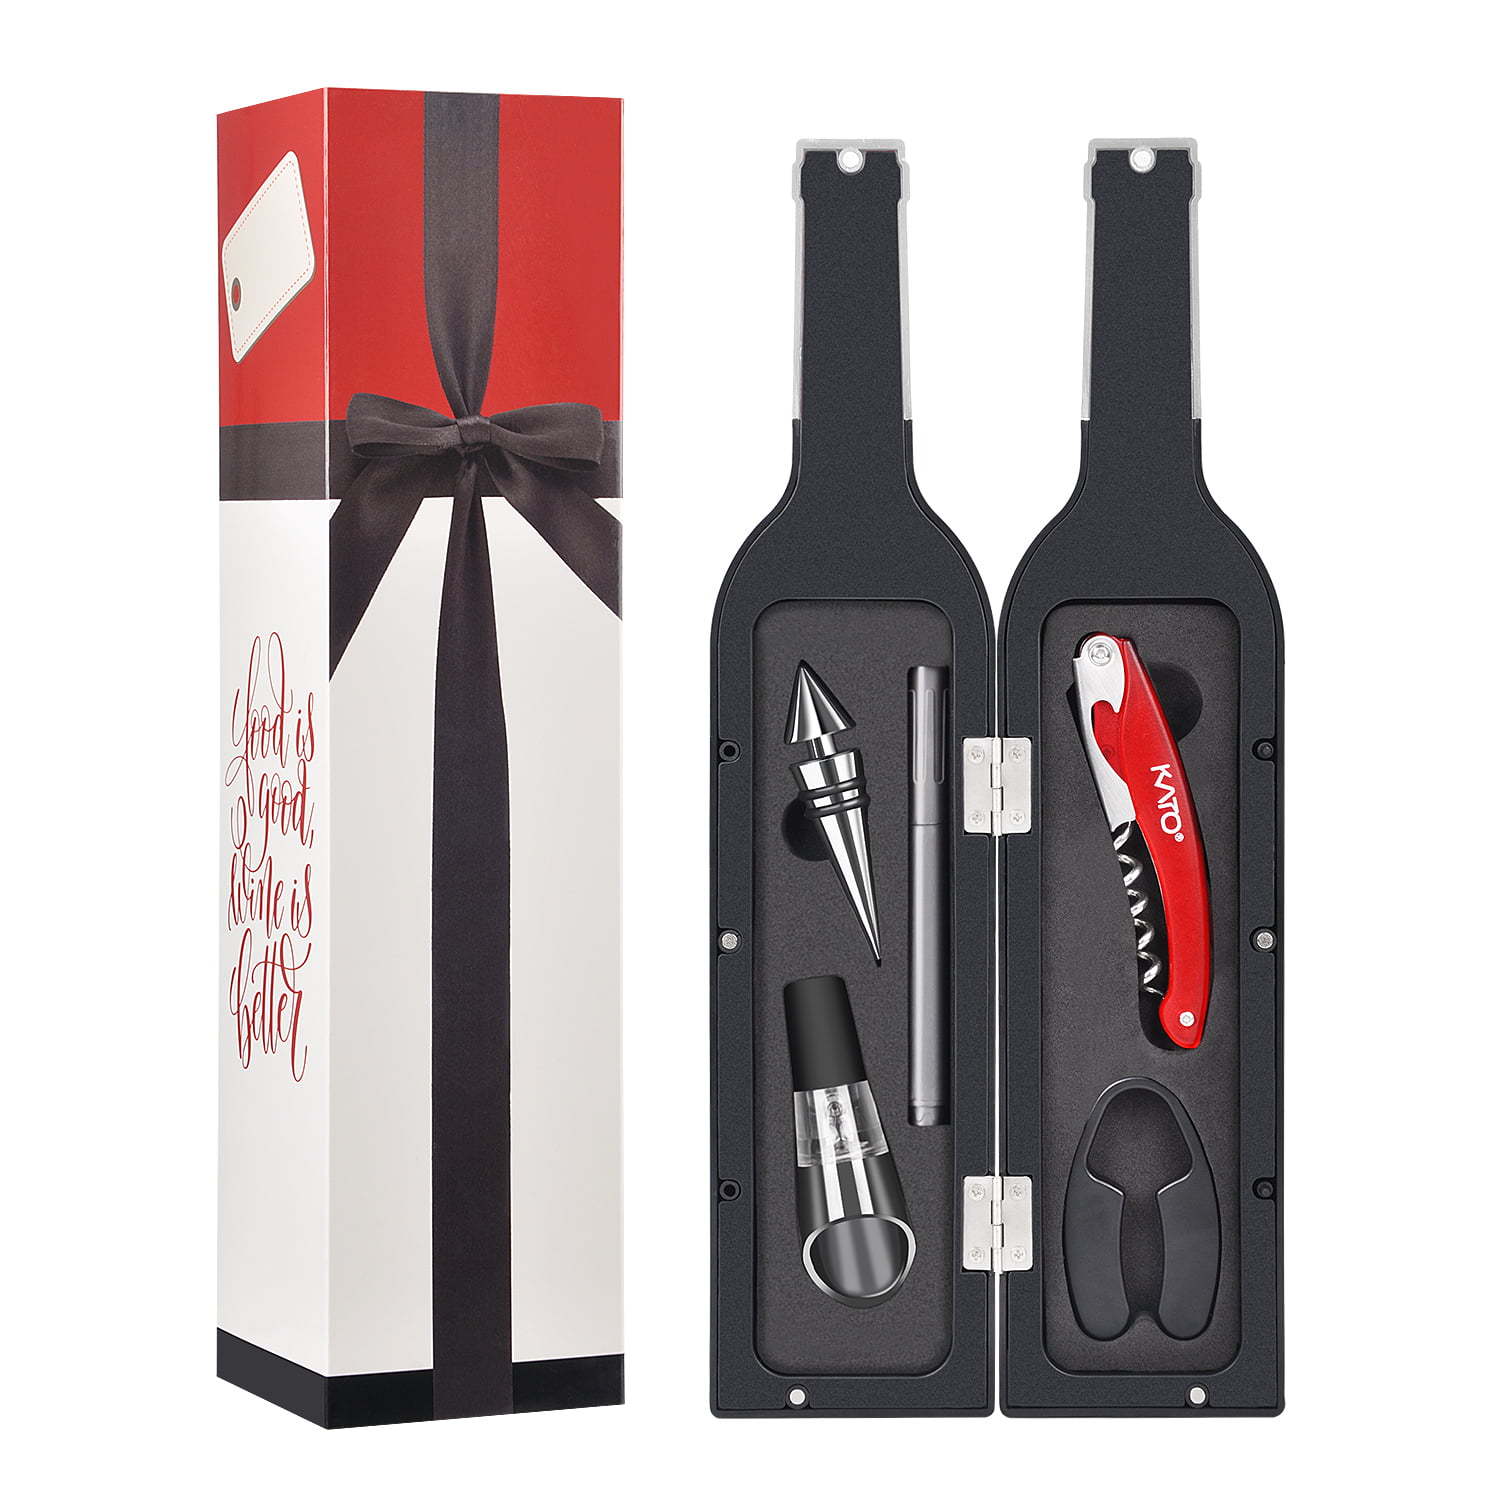 travel wine opener kit